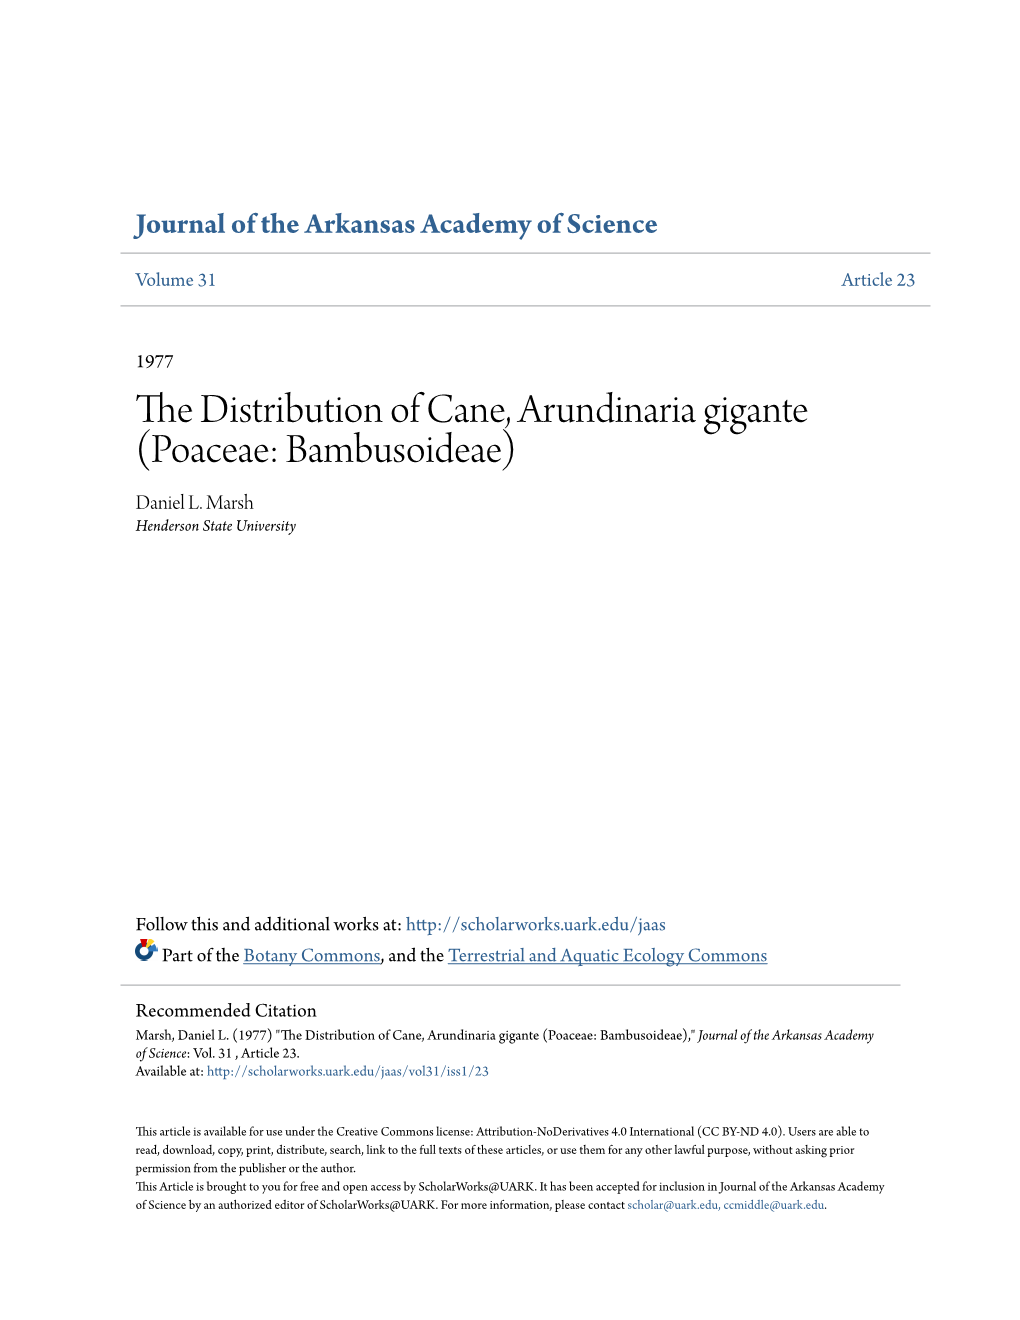 The Distribution of Cane, Arundinaria Gigante (Poaceae: Bambusoideae) Daniel L